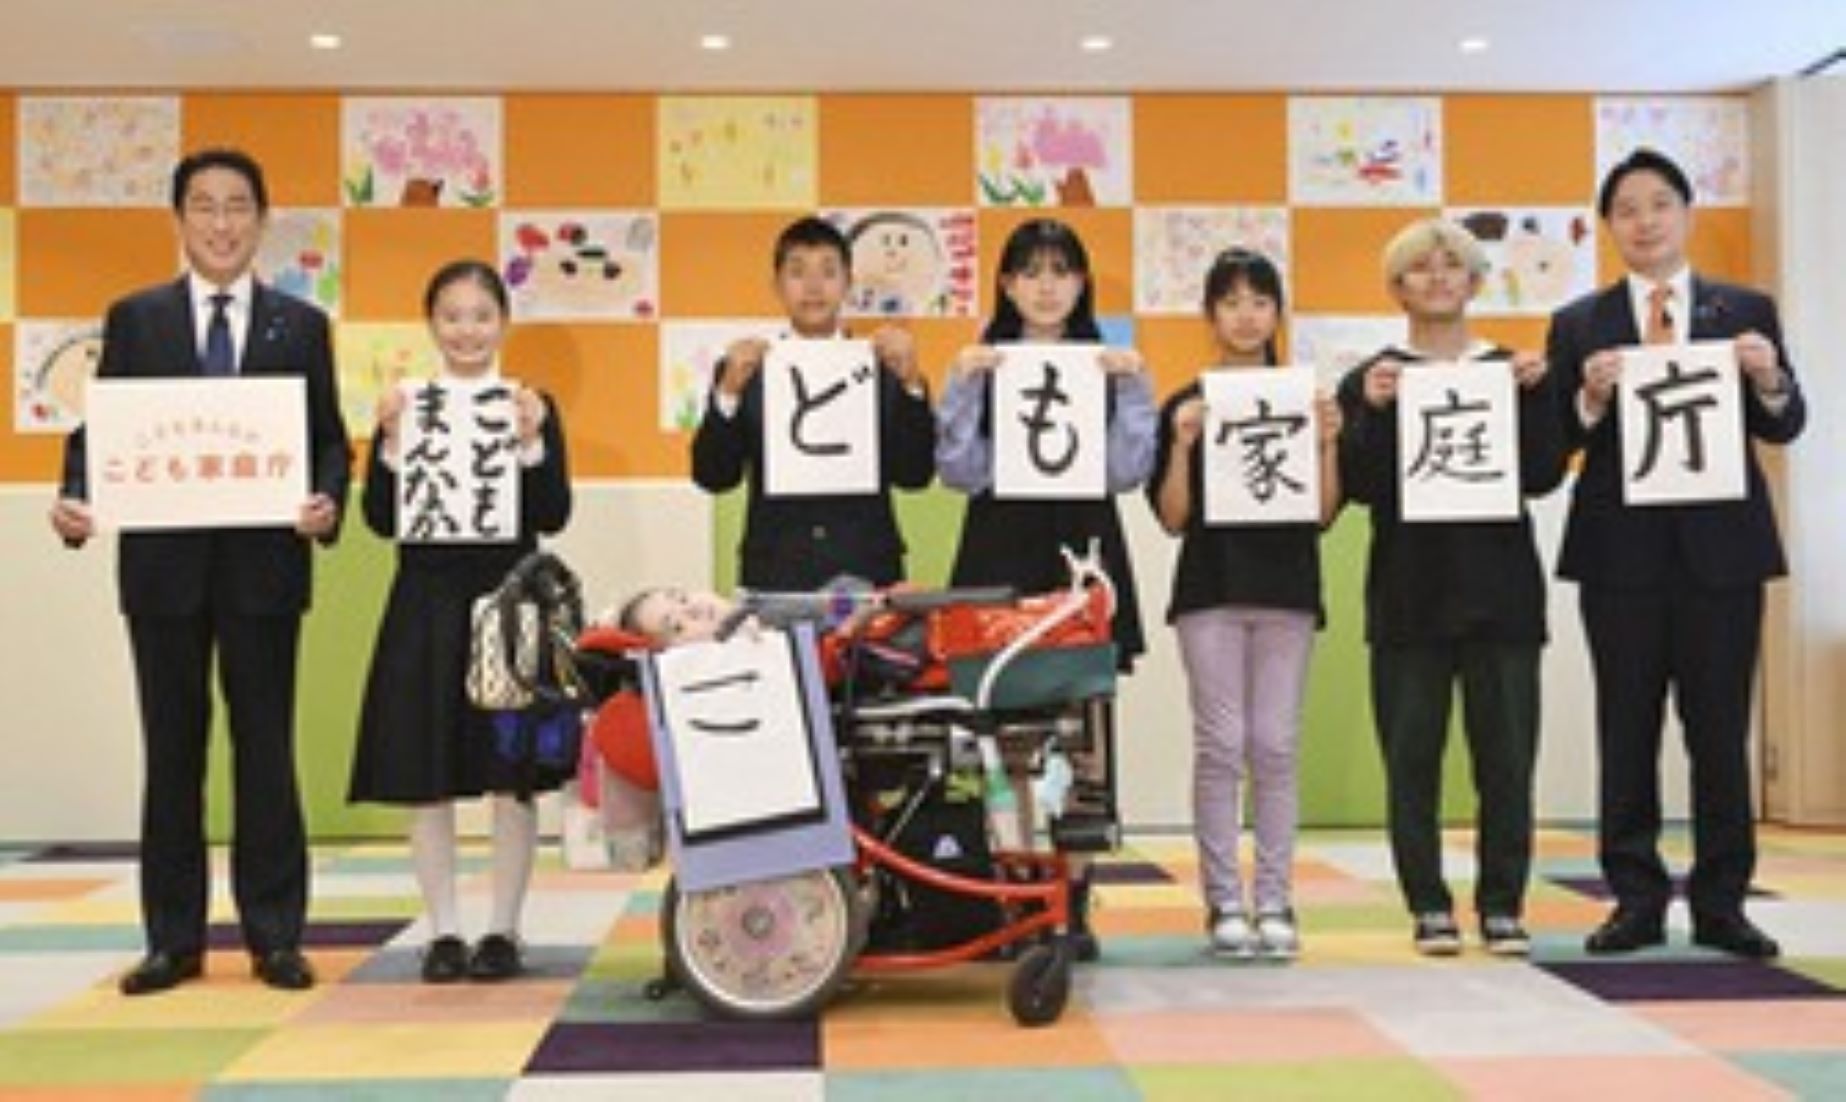 Half Of Unmarried People Under 30 In Japan Do Not Want Children: Survey